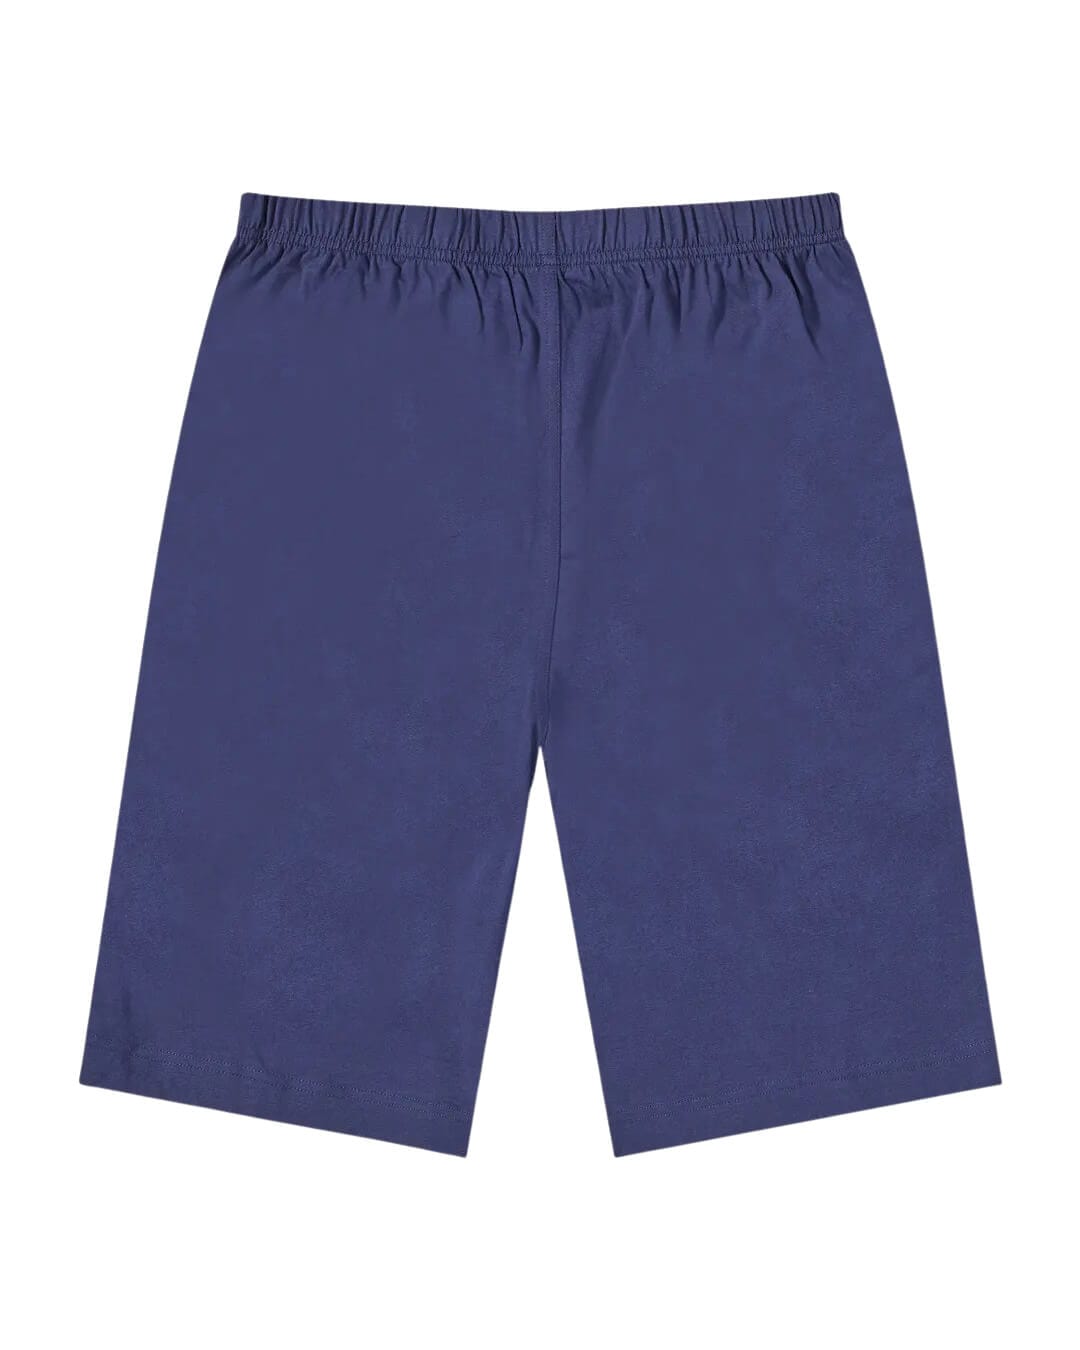 Polo Ralph Lauren Sleepwear Polo Ralph Lauren Navy Sleepwear Shorts